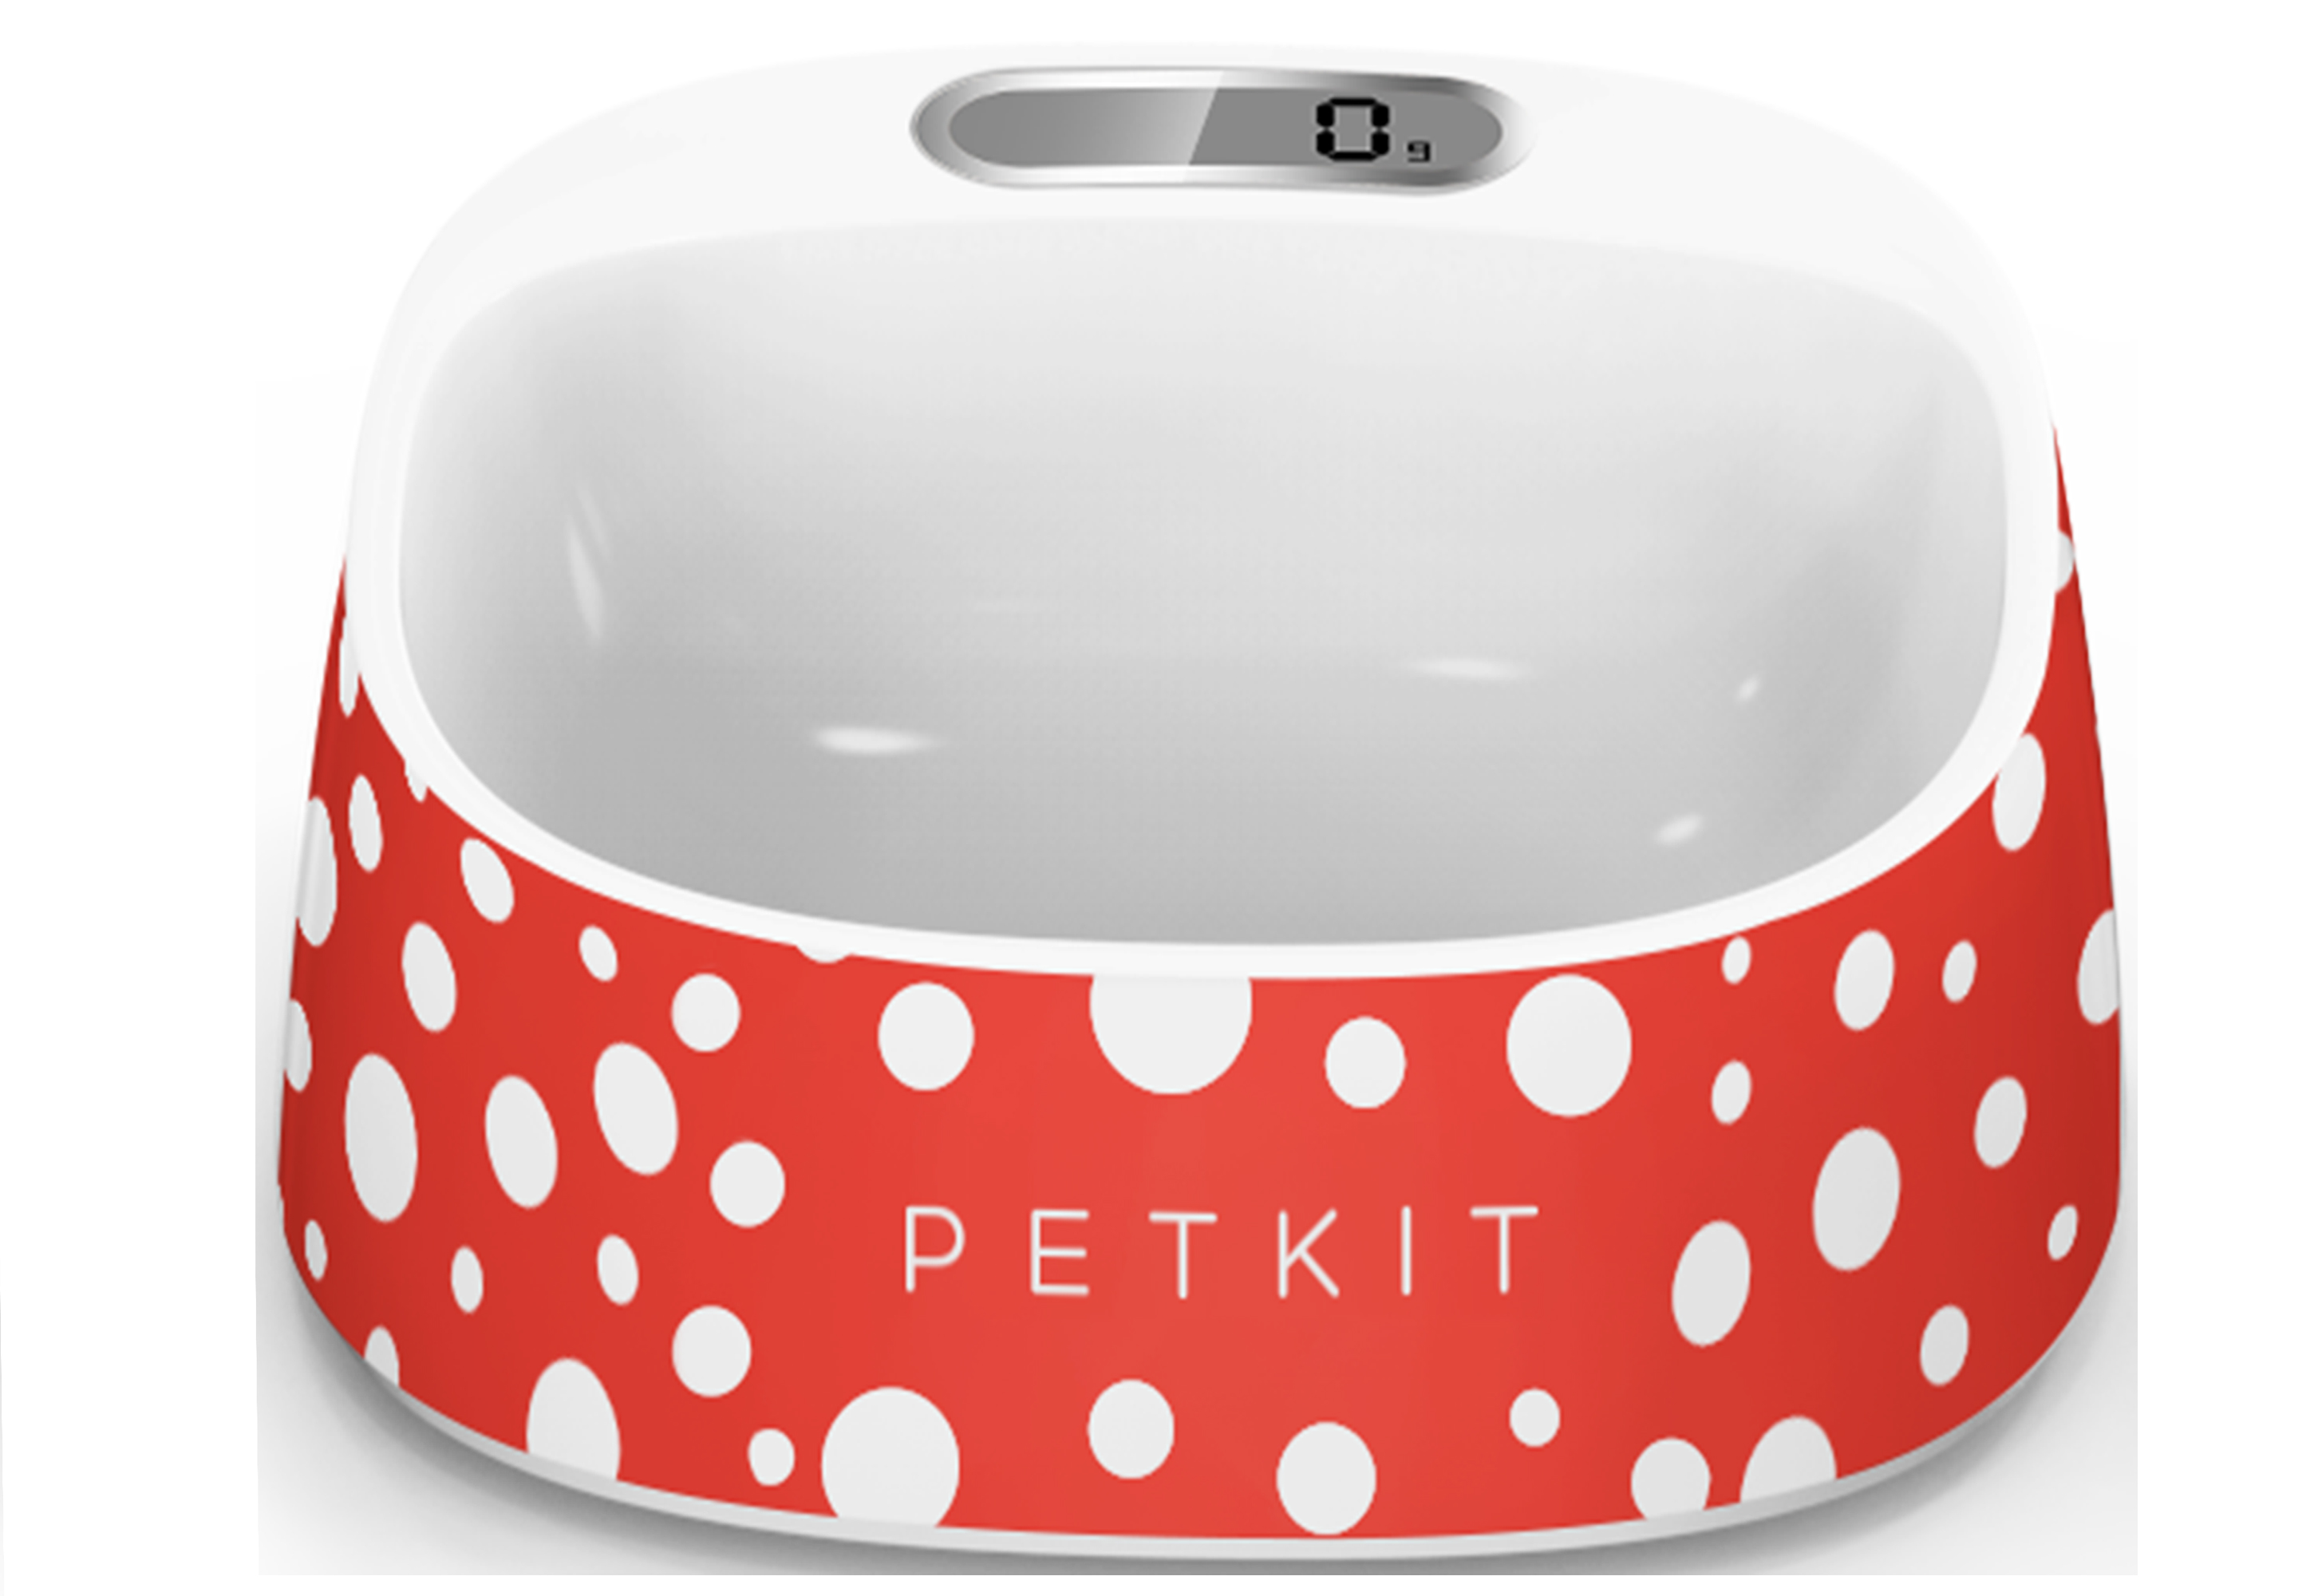 Petkit FRESH Smart Digital Feeding Pet Bowl - Red/White